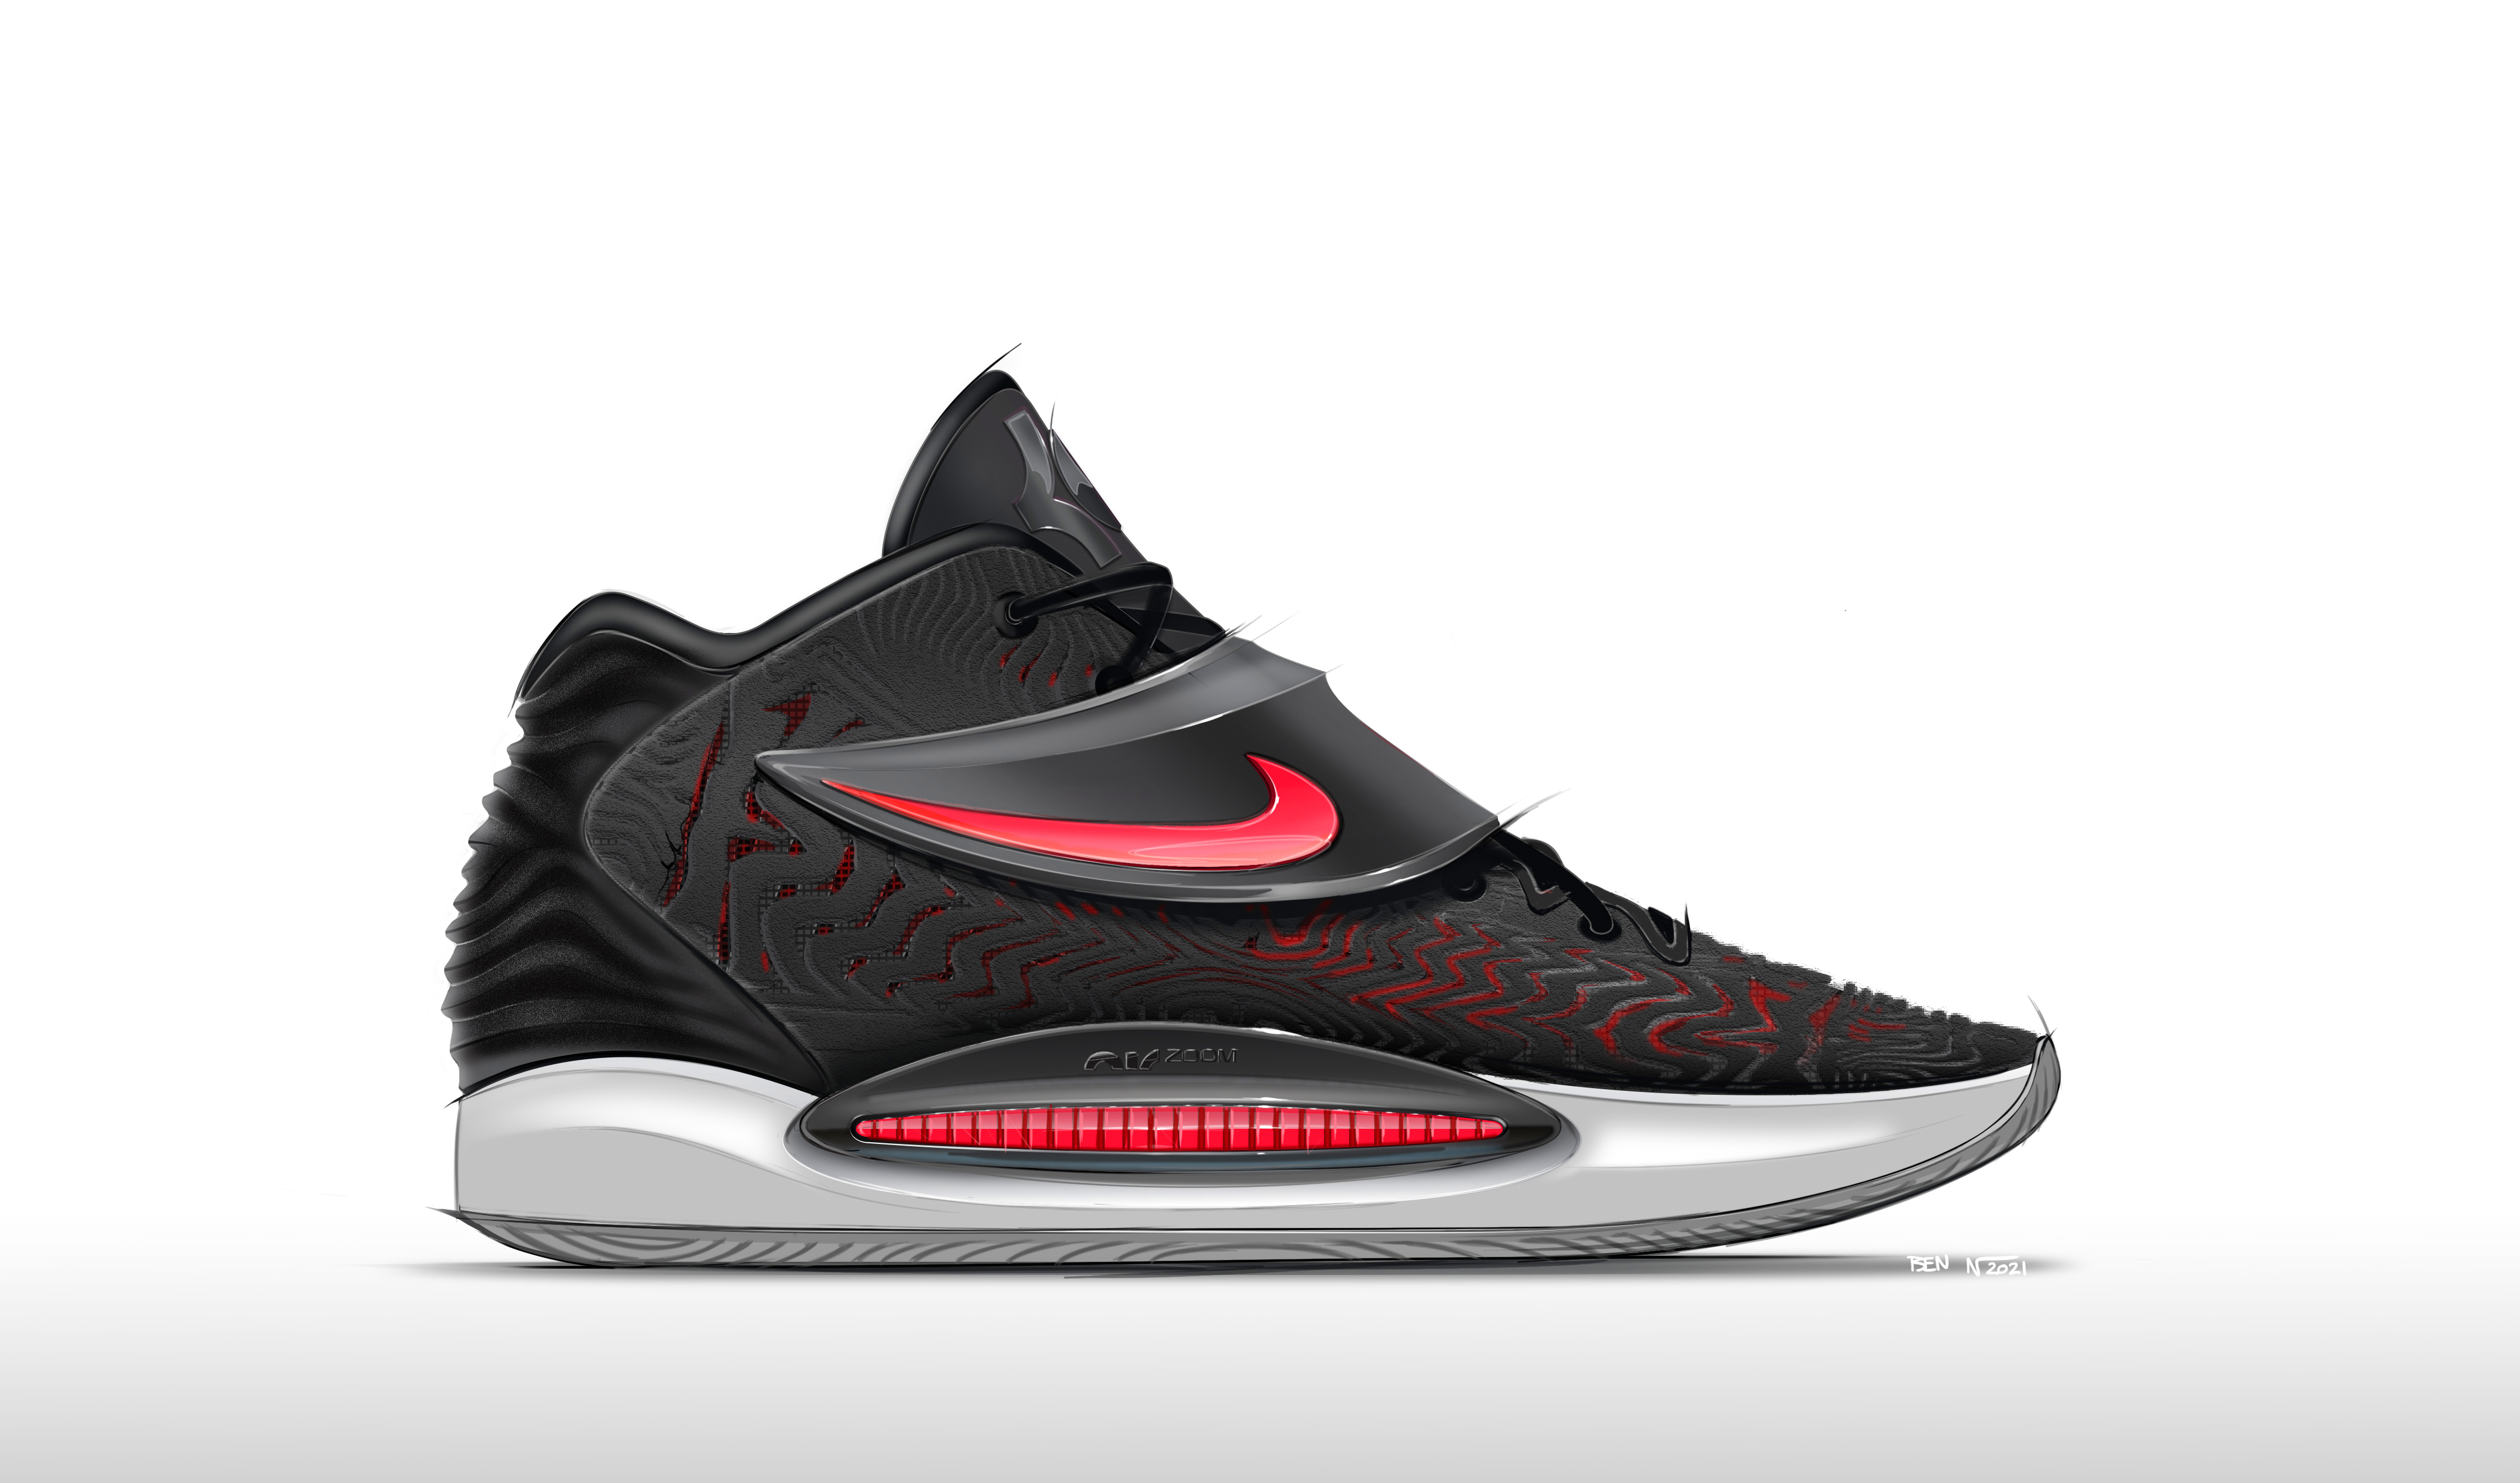 Profile view of the Nike KD14 basketball shoe